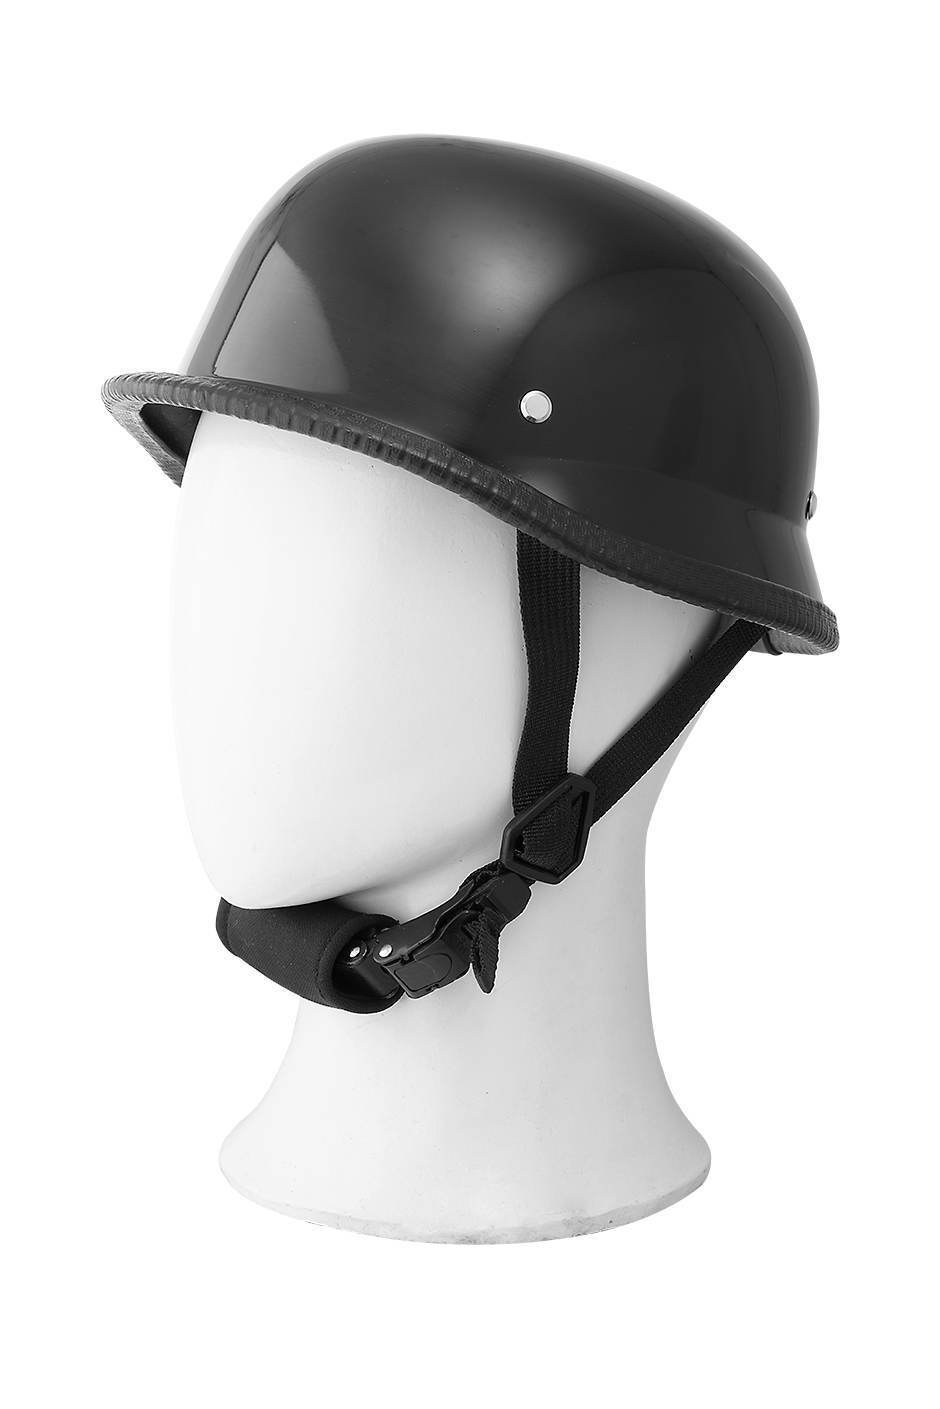 German Novelty Shiny Black Helmet With Q-Release